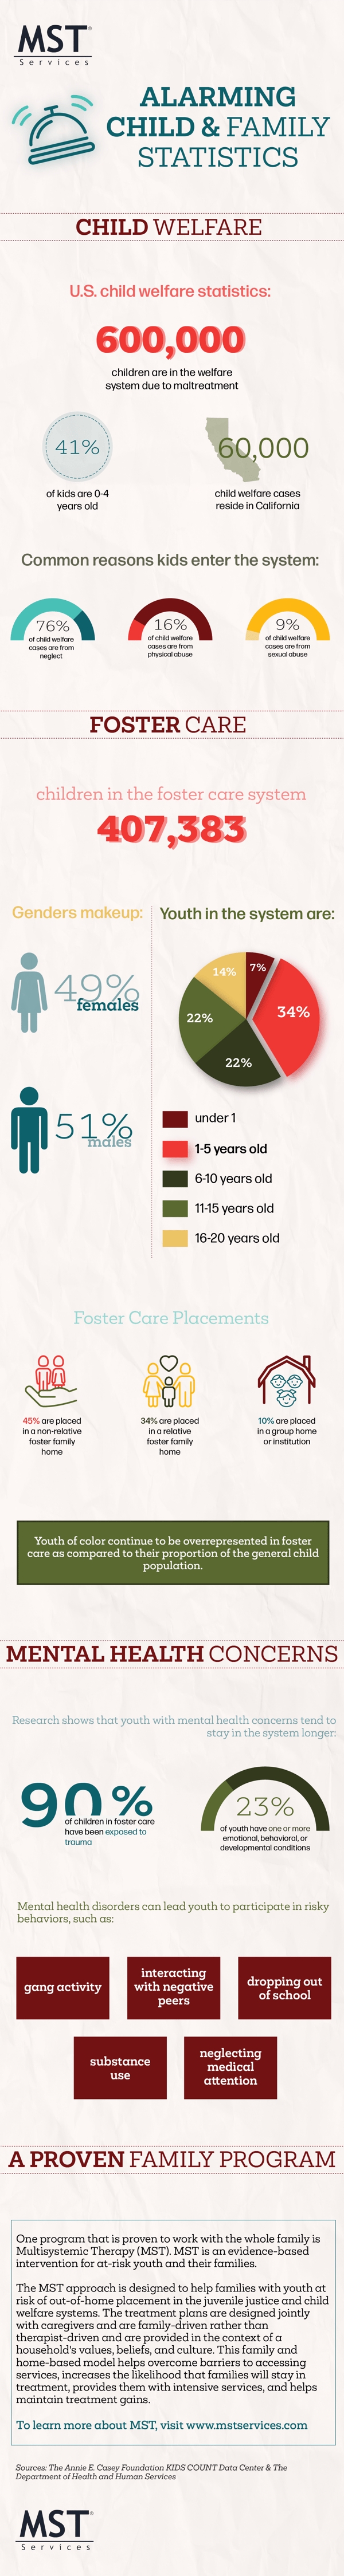 child welfare infographic 